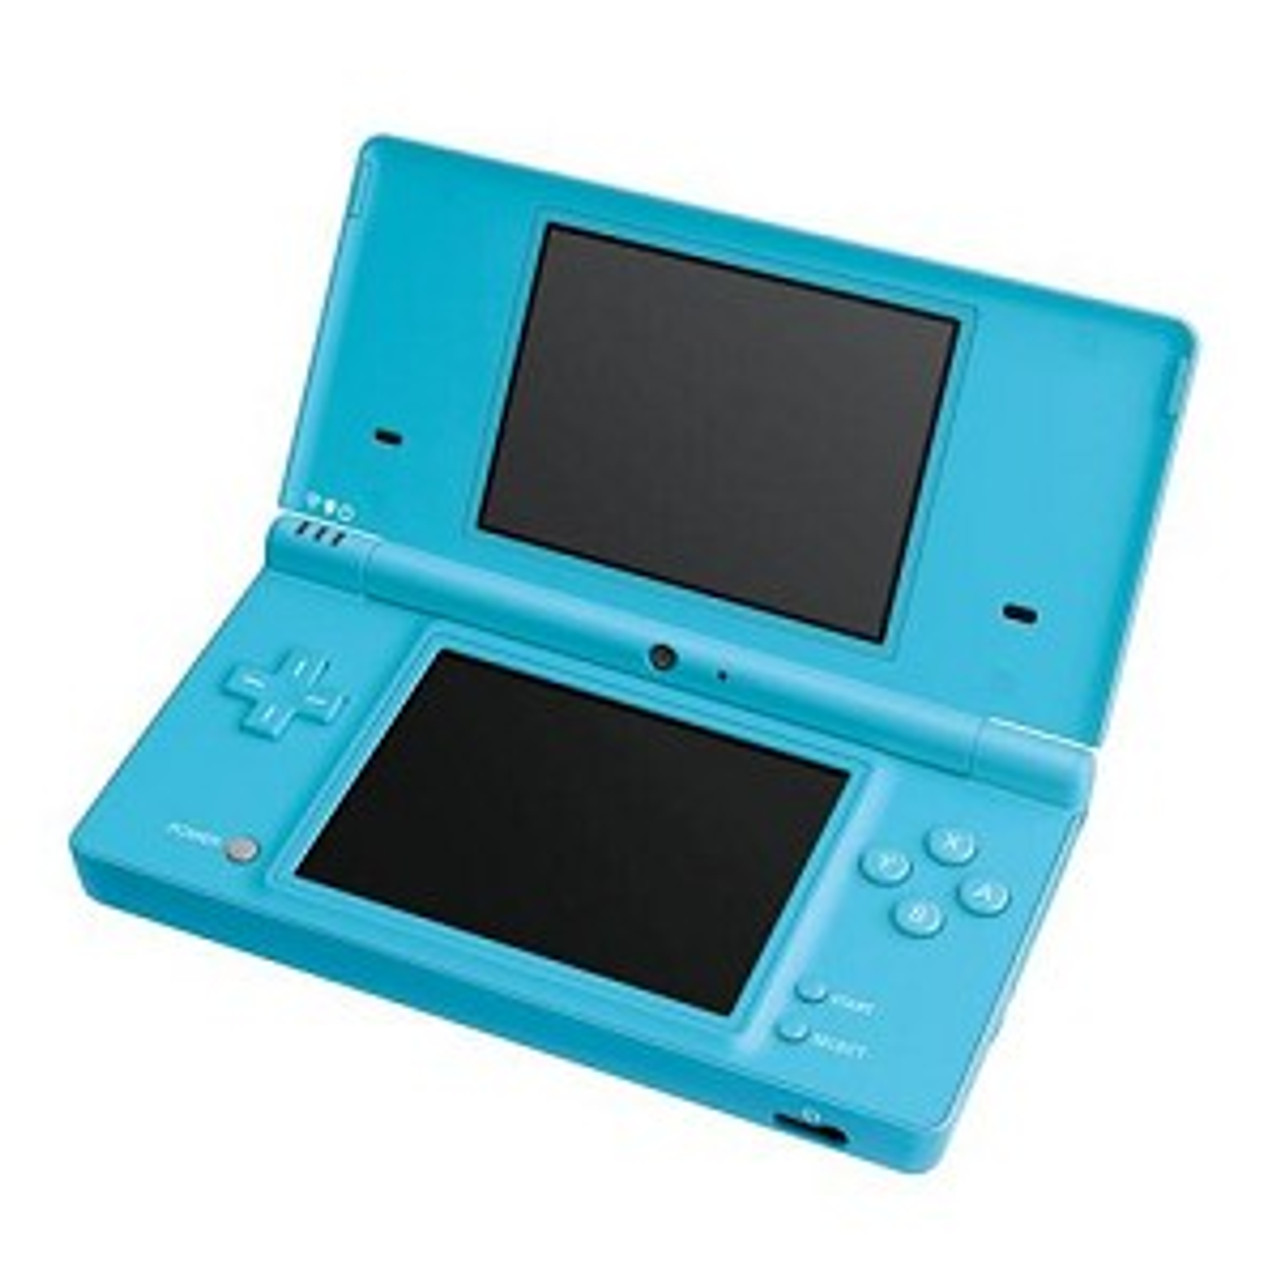 Nintendo DSi Blue Handheld System For Sale | DKOldies